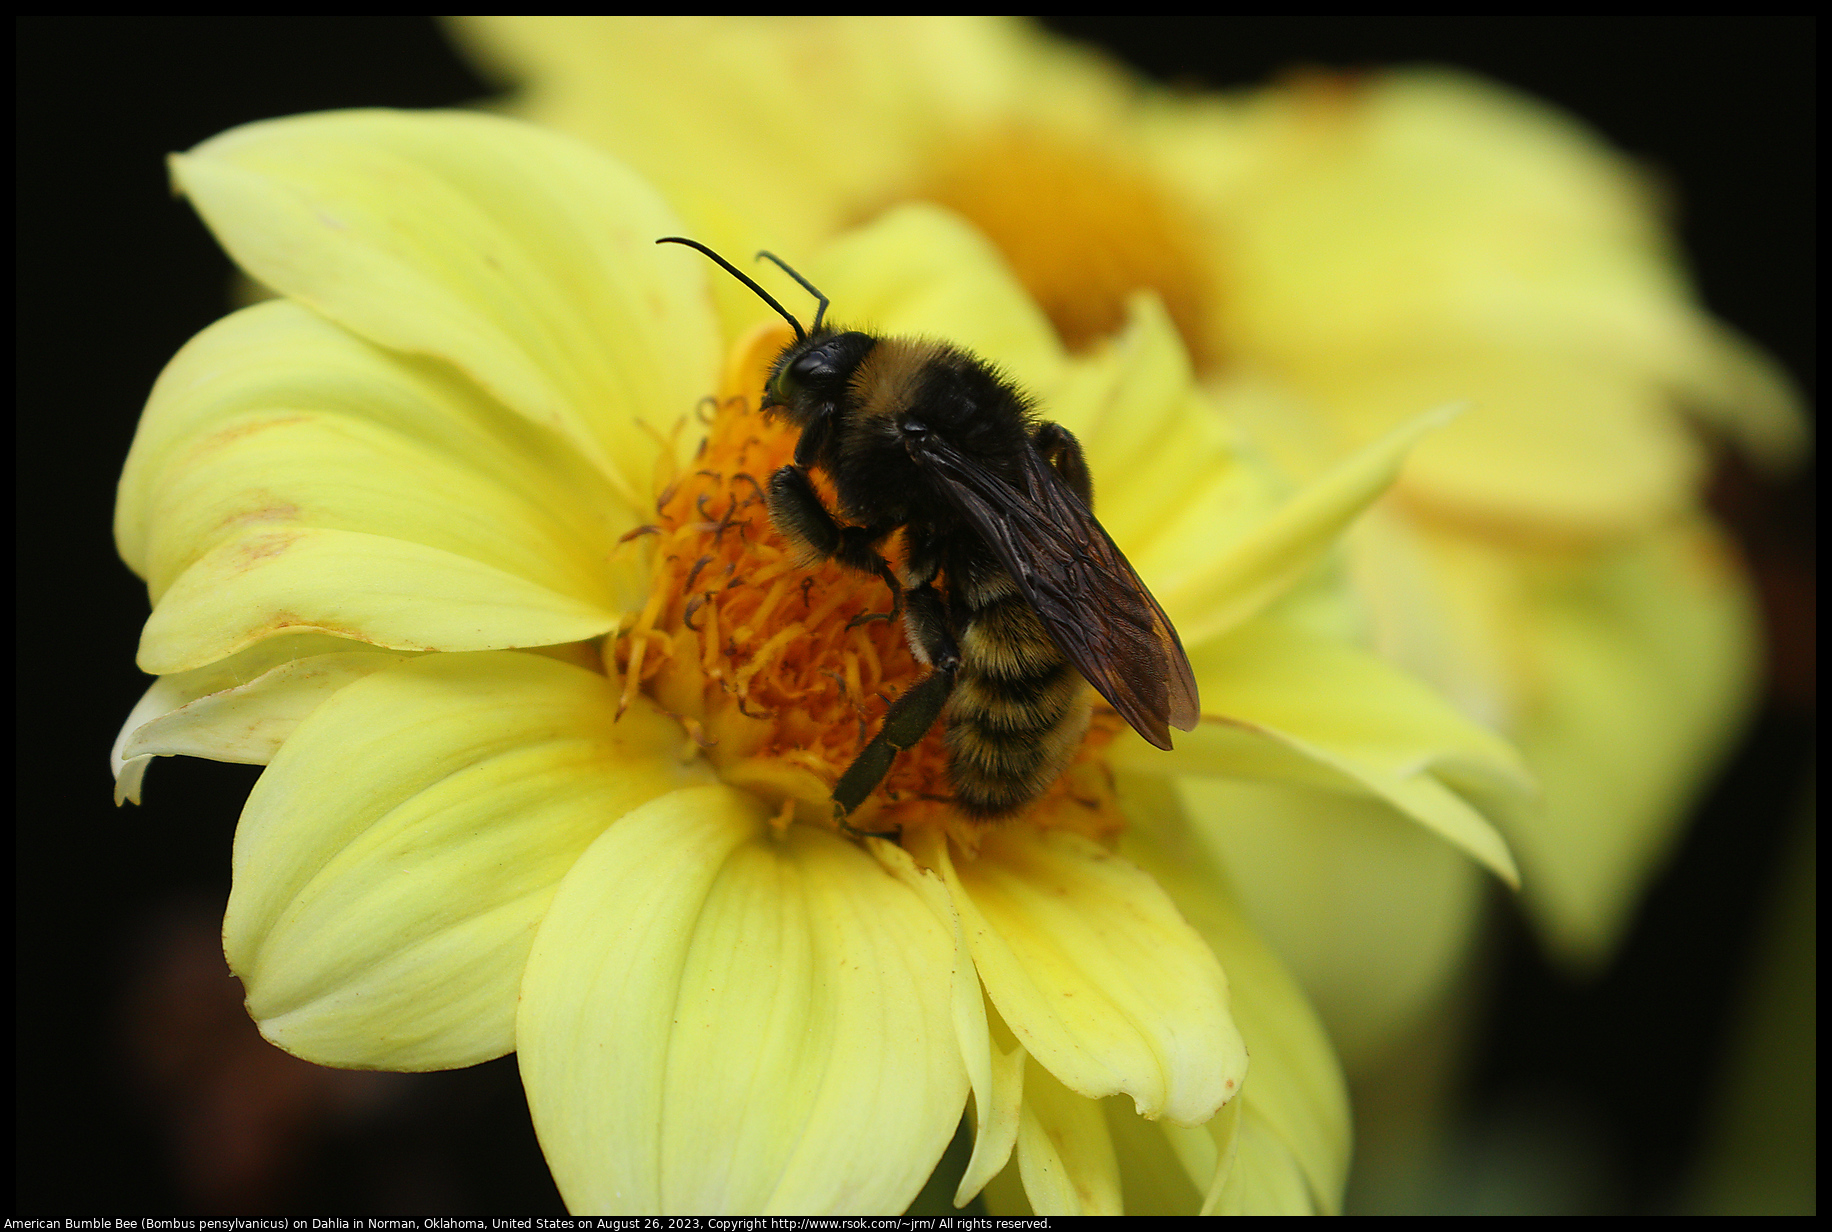 American Bumble Bee (Bombus pensylvanicus) on Dahlia in Norman, Oklahoma, United States on August 26, 2023